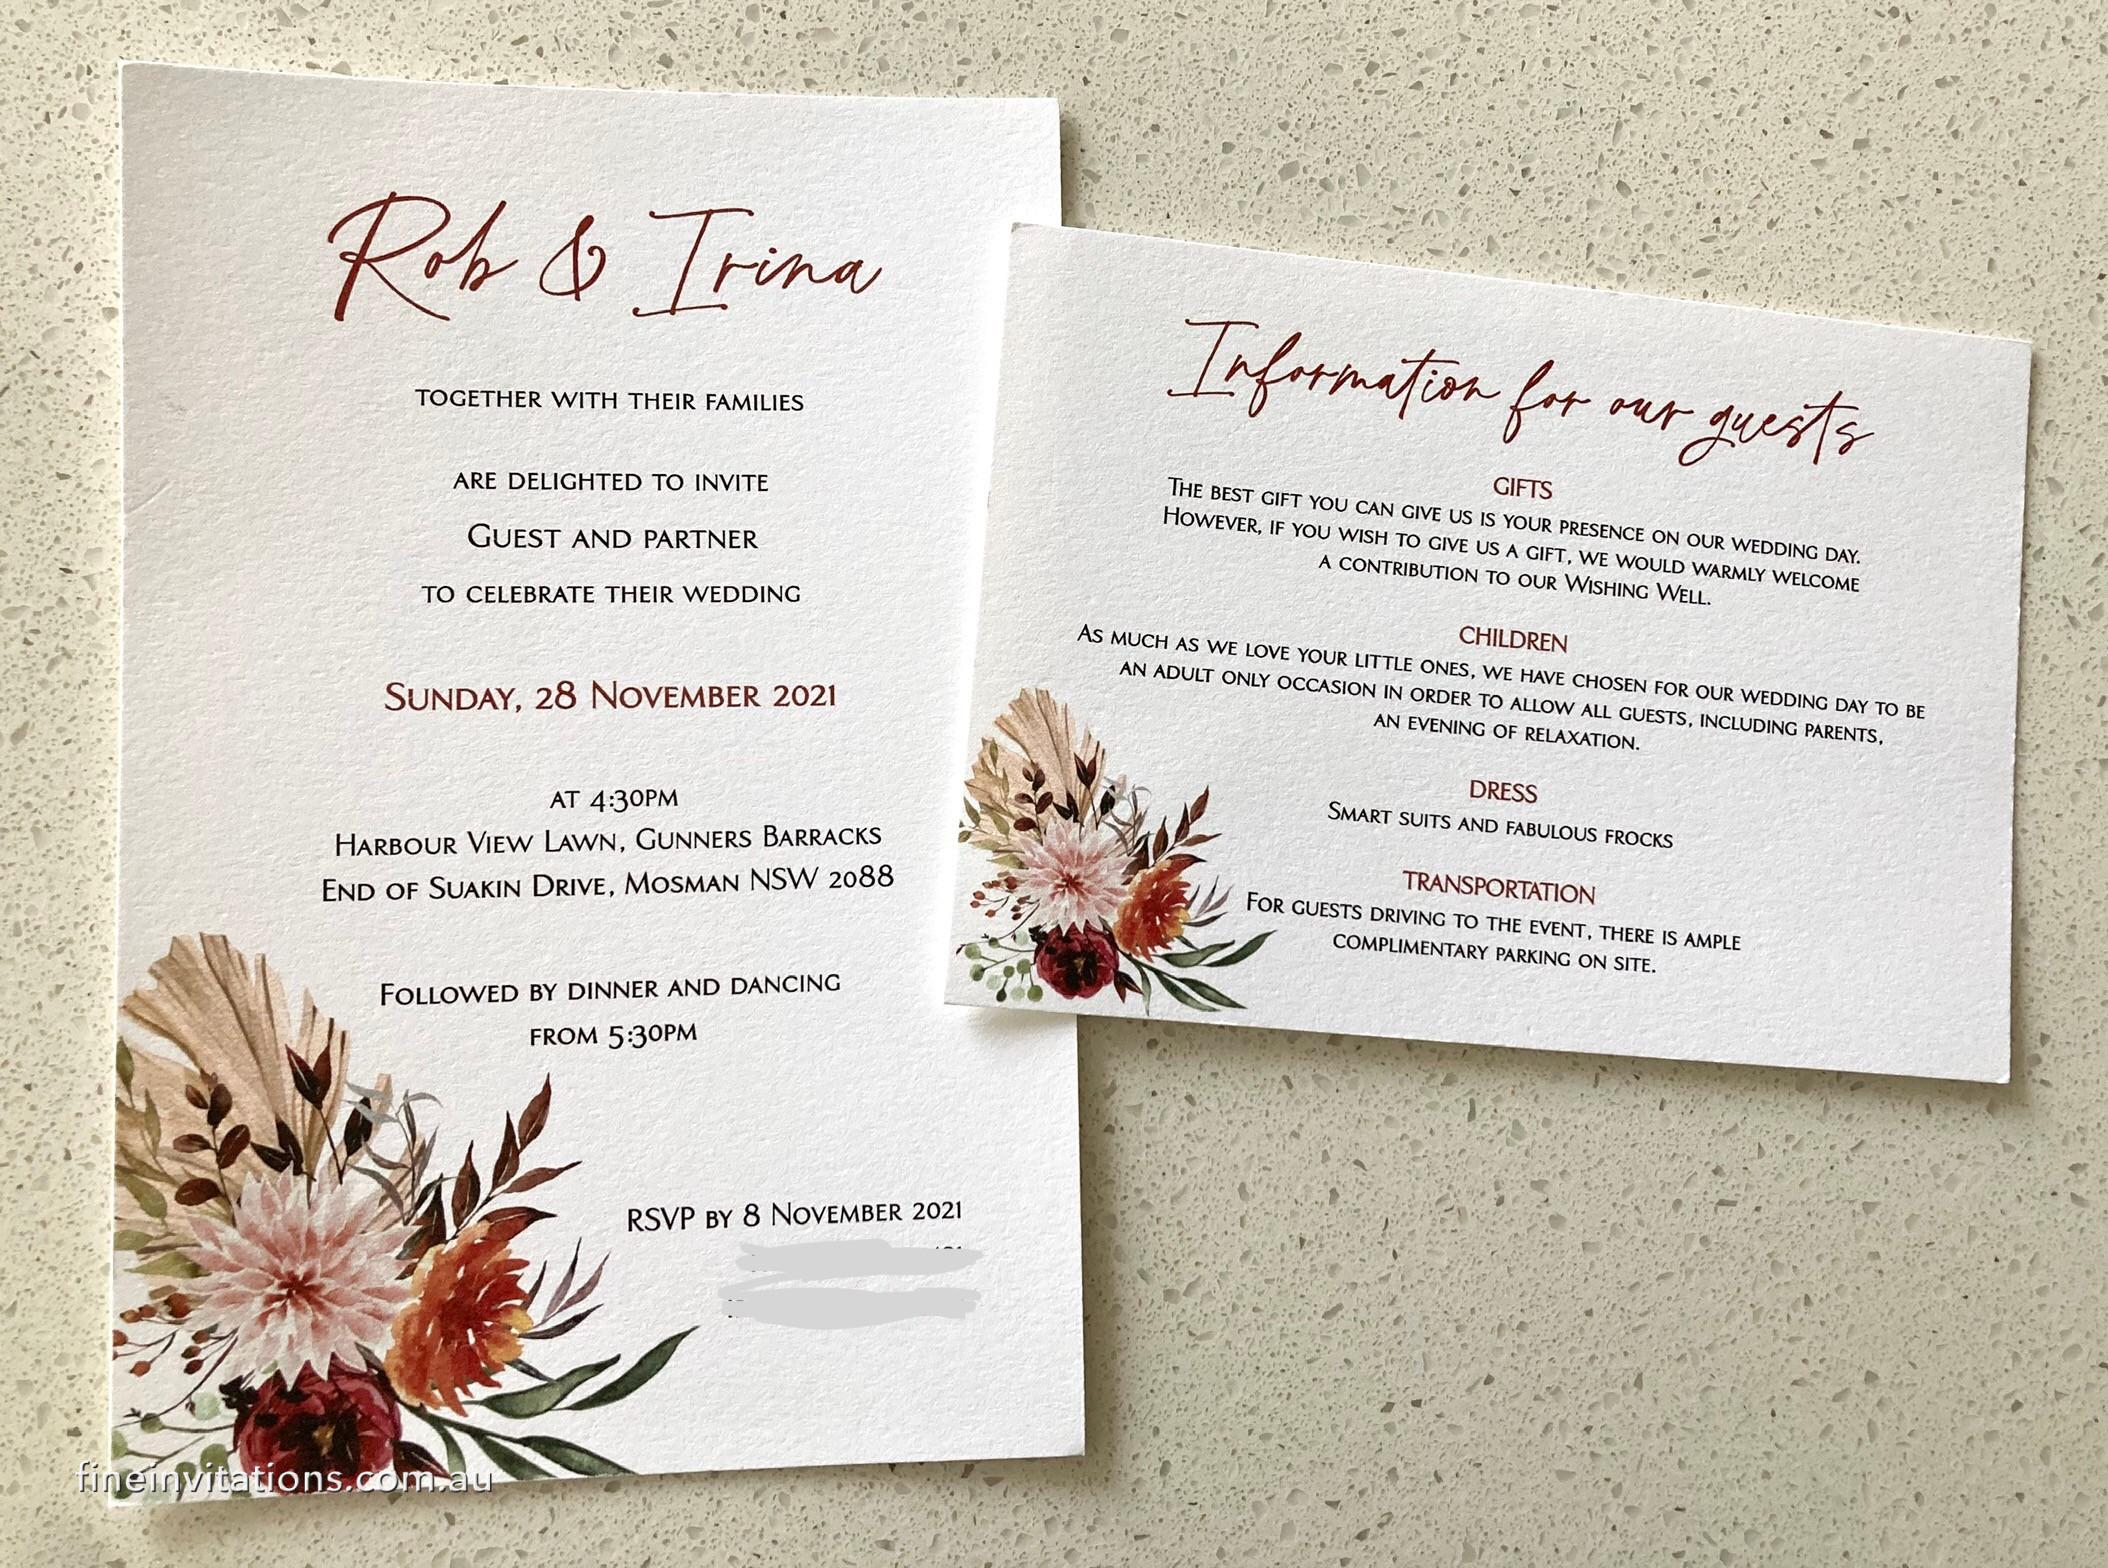 Sydney wedding invitation autumn tones terracotta